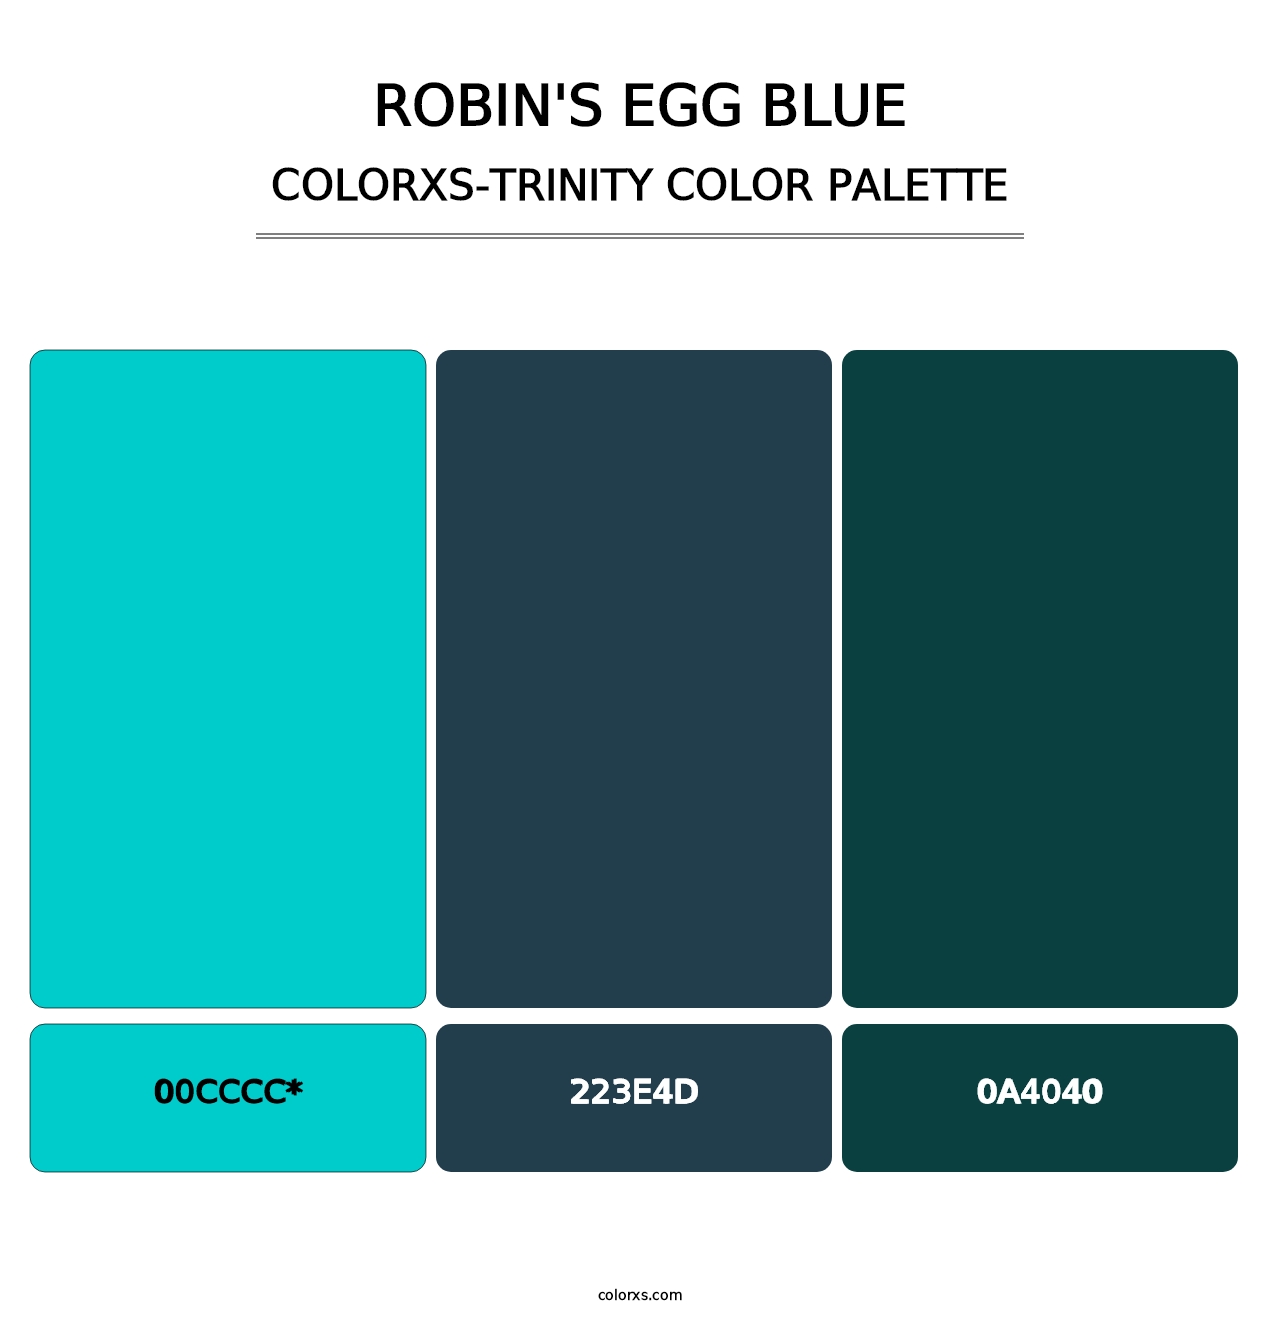 Robin's Egg Blue - Colorxs Trinity Palette